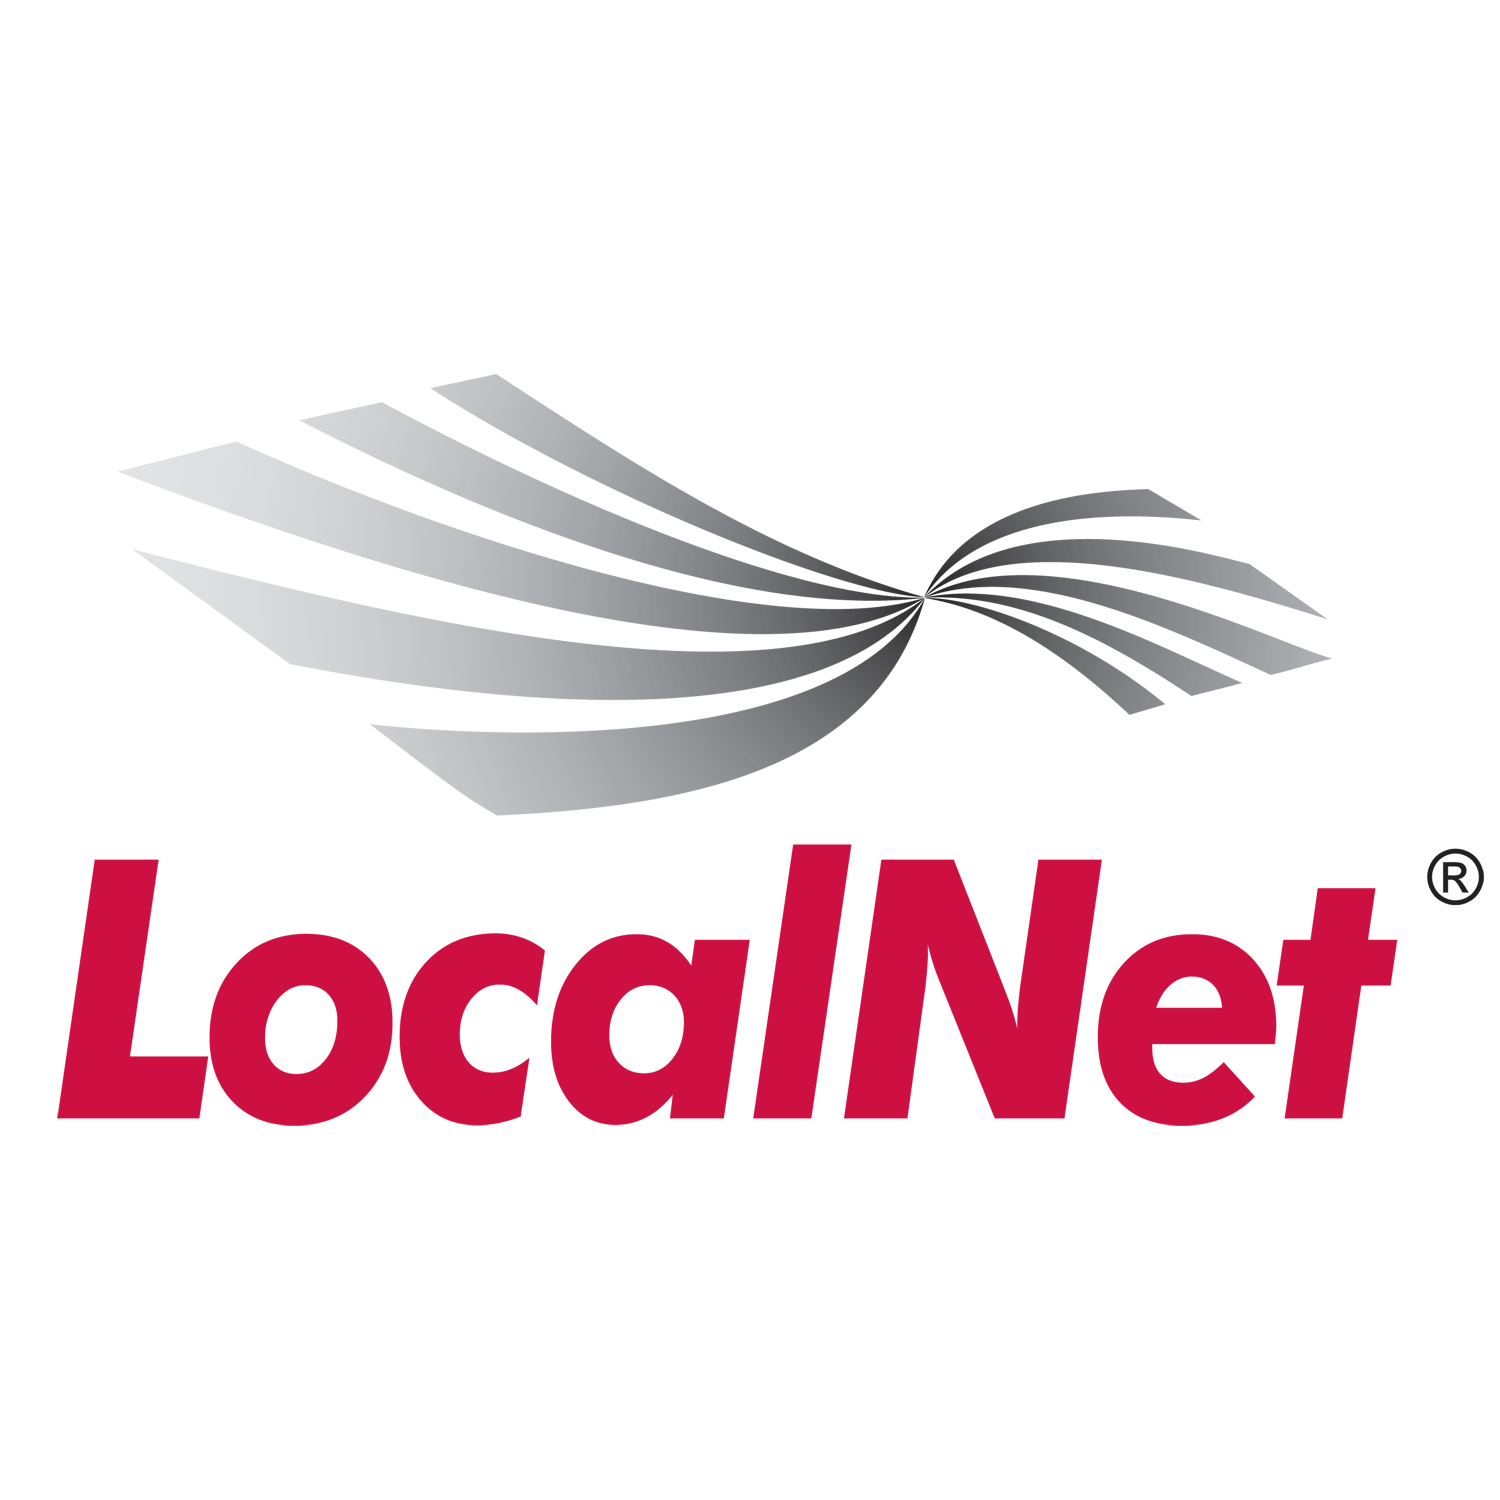 Local Net Corp